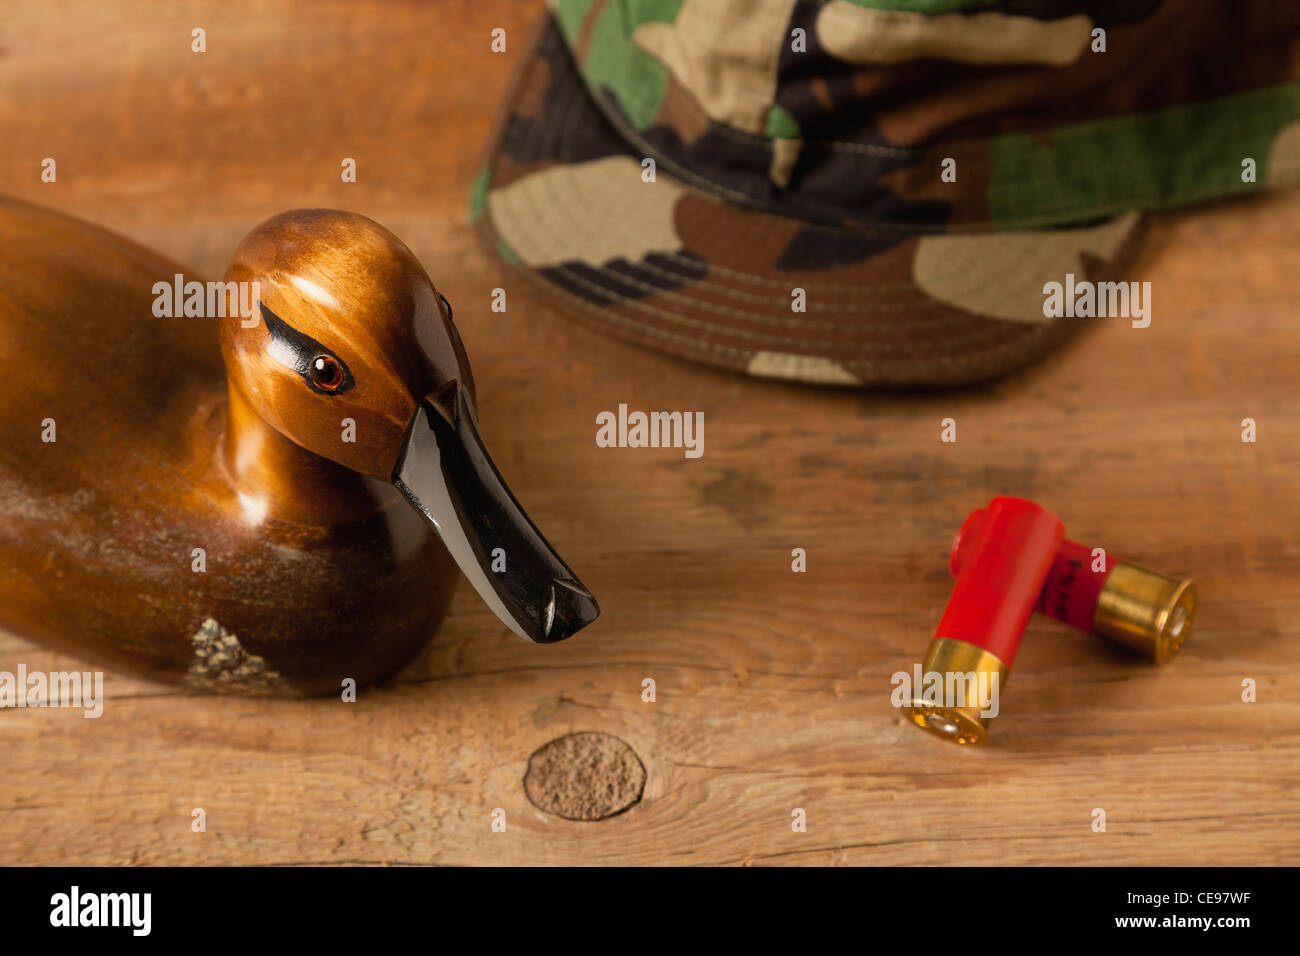 USA, Illinois, Metamora, Wooden duck and bullets on table Stock Photo